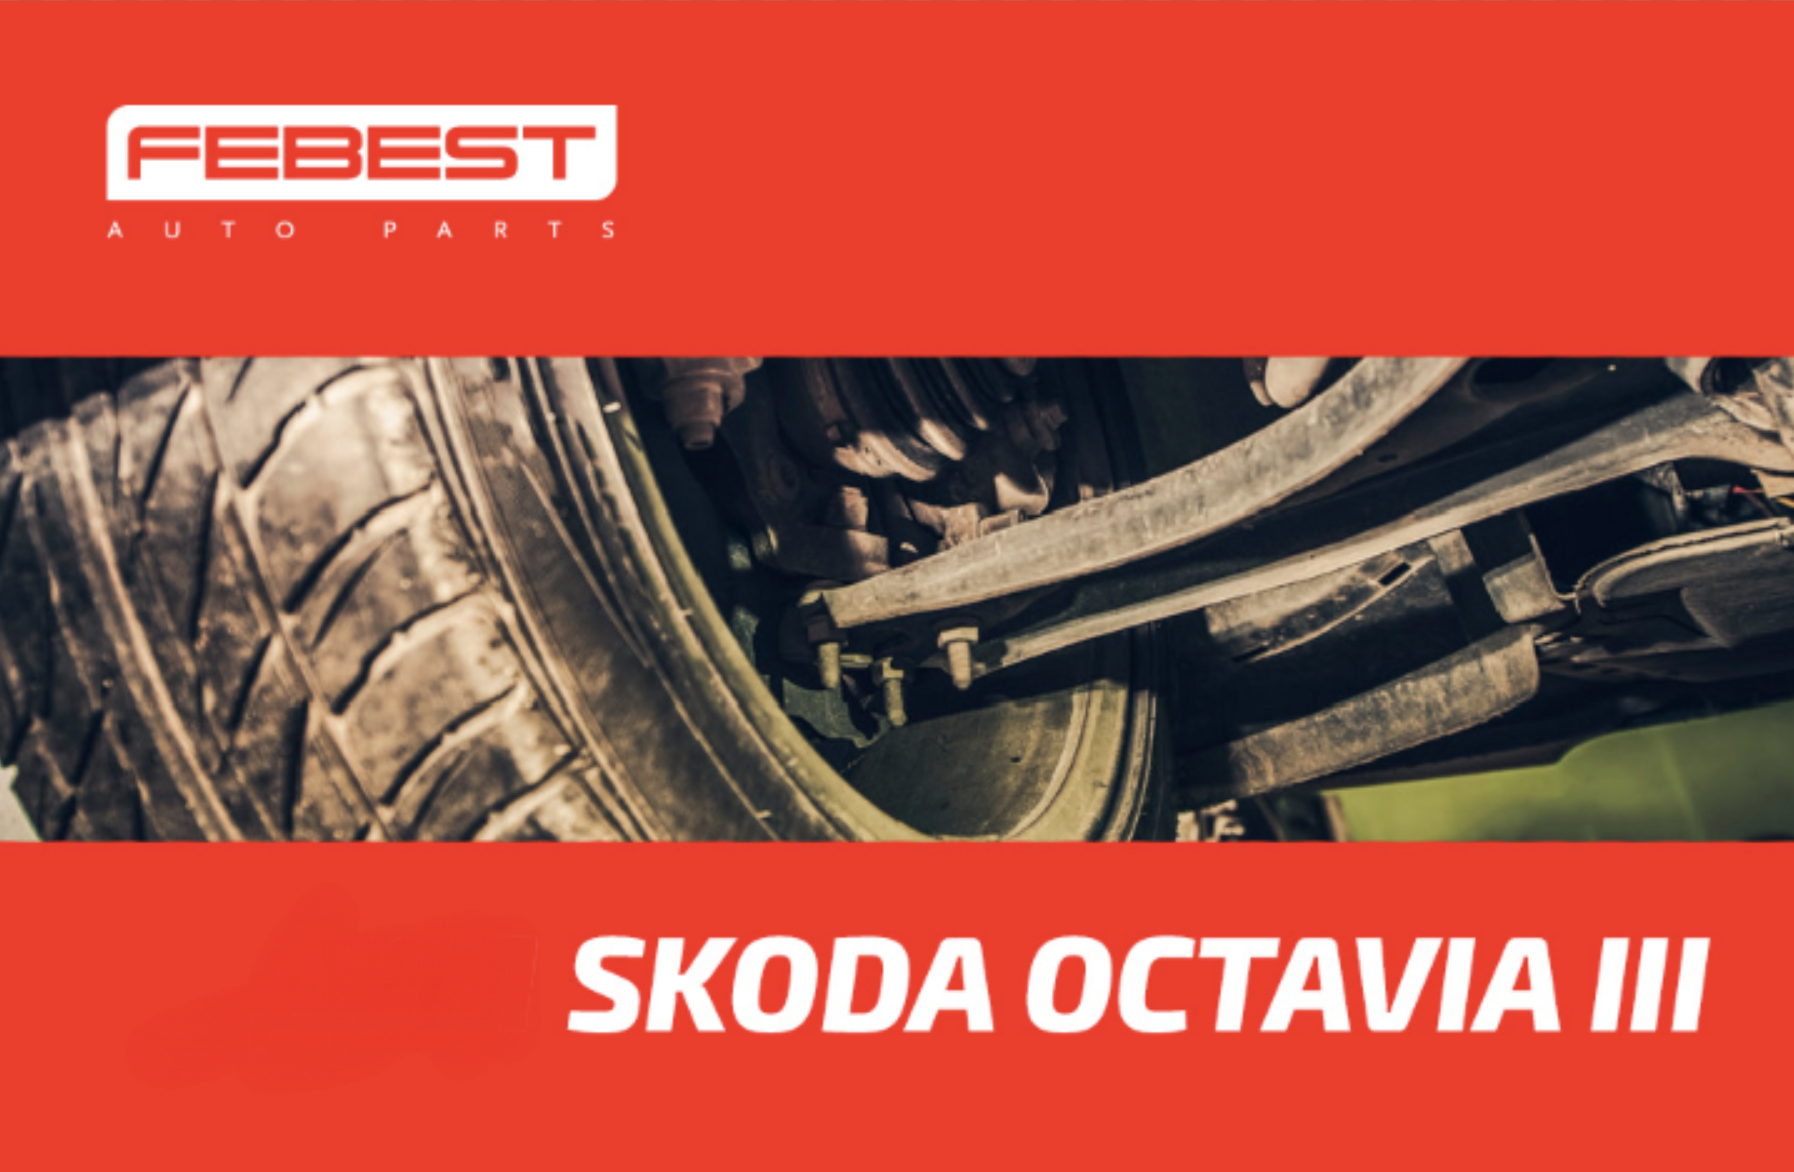 Febest spare parts for Skoda Octavia III